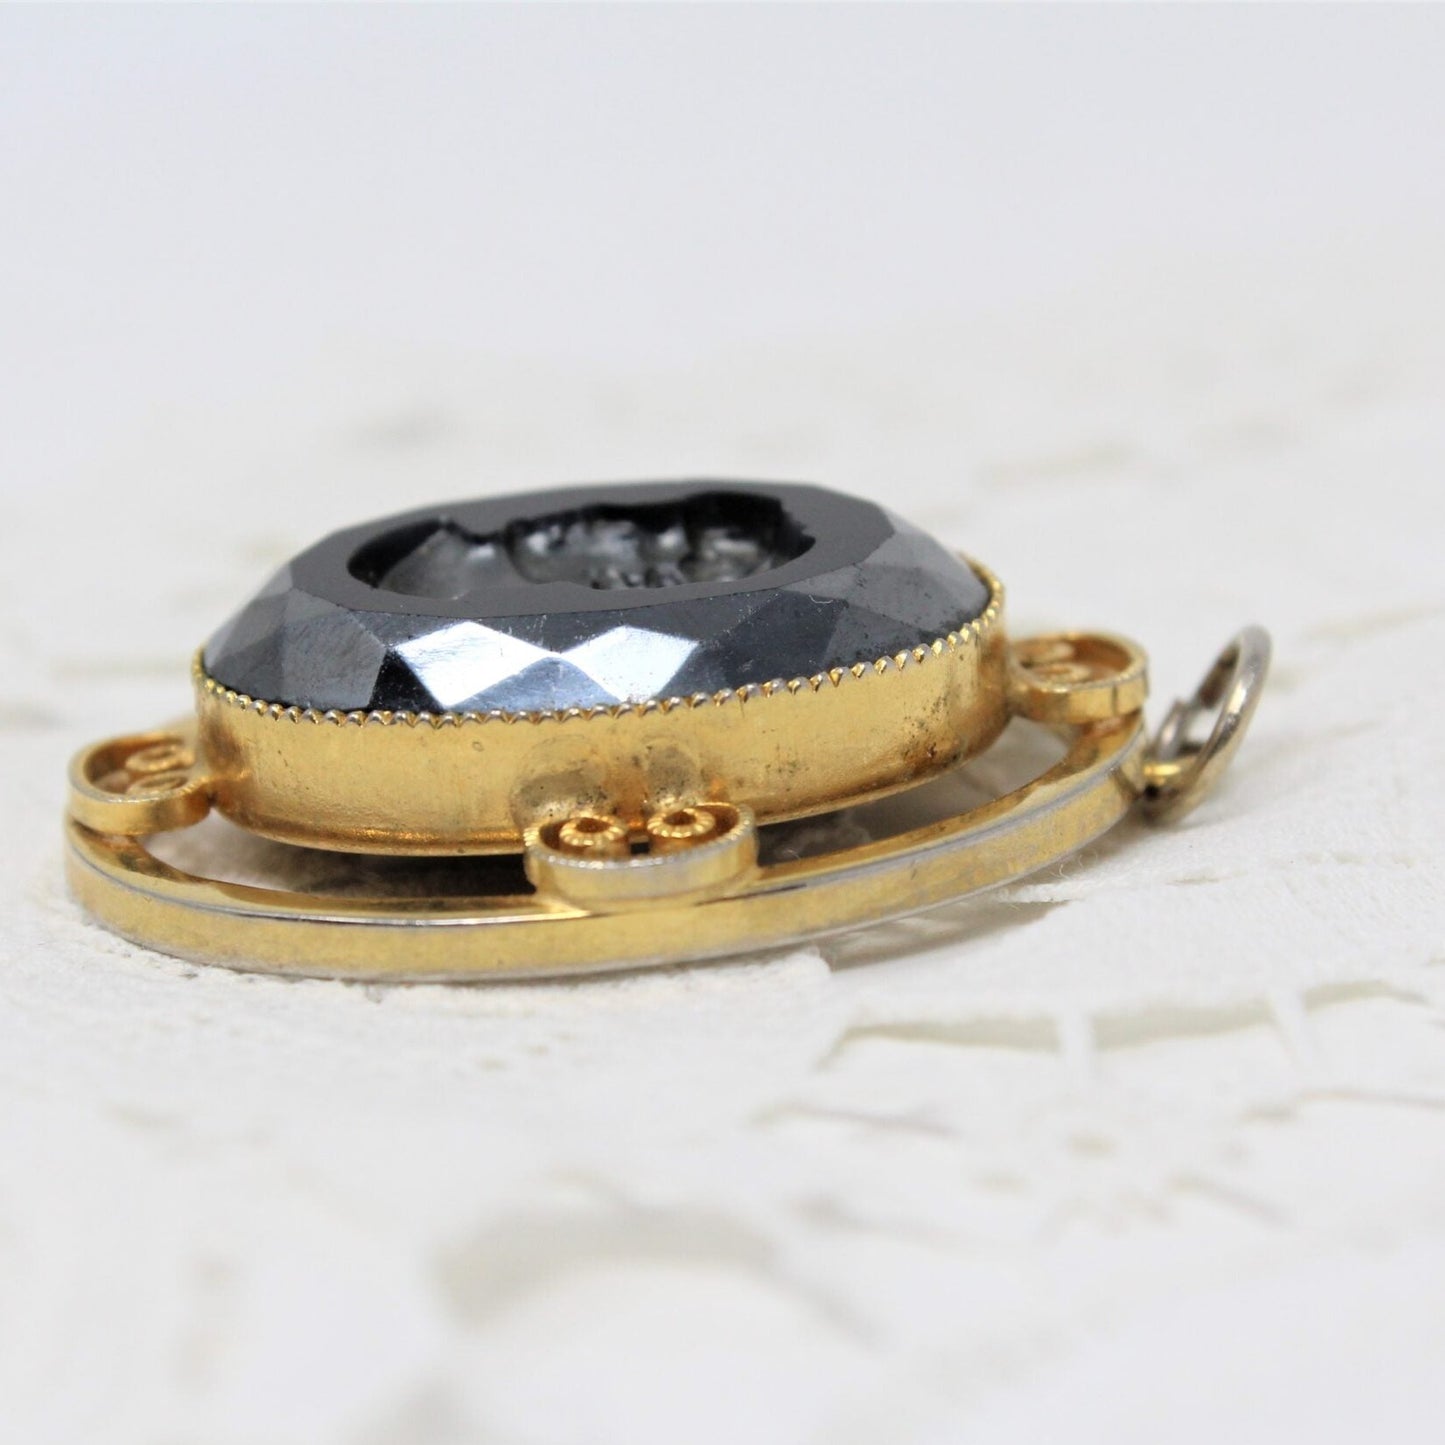 Pendant, Cameo Black Intaglio with Gold-Tone Filigree, Vintage